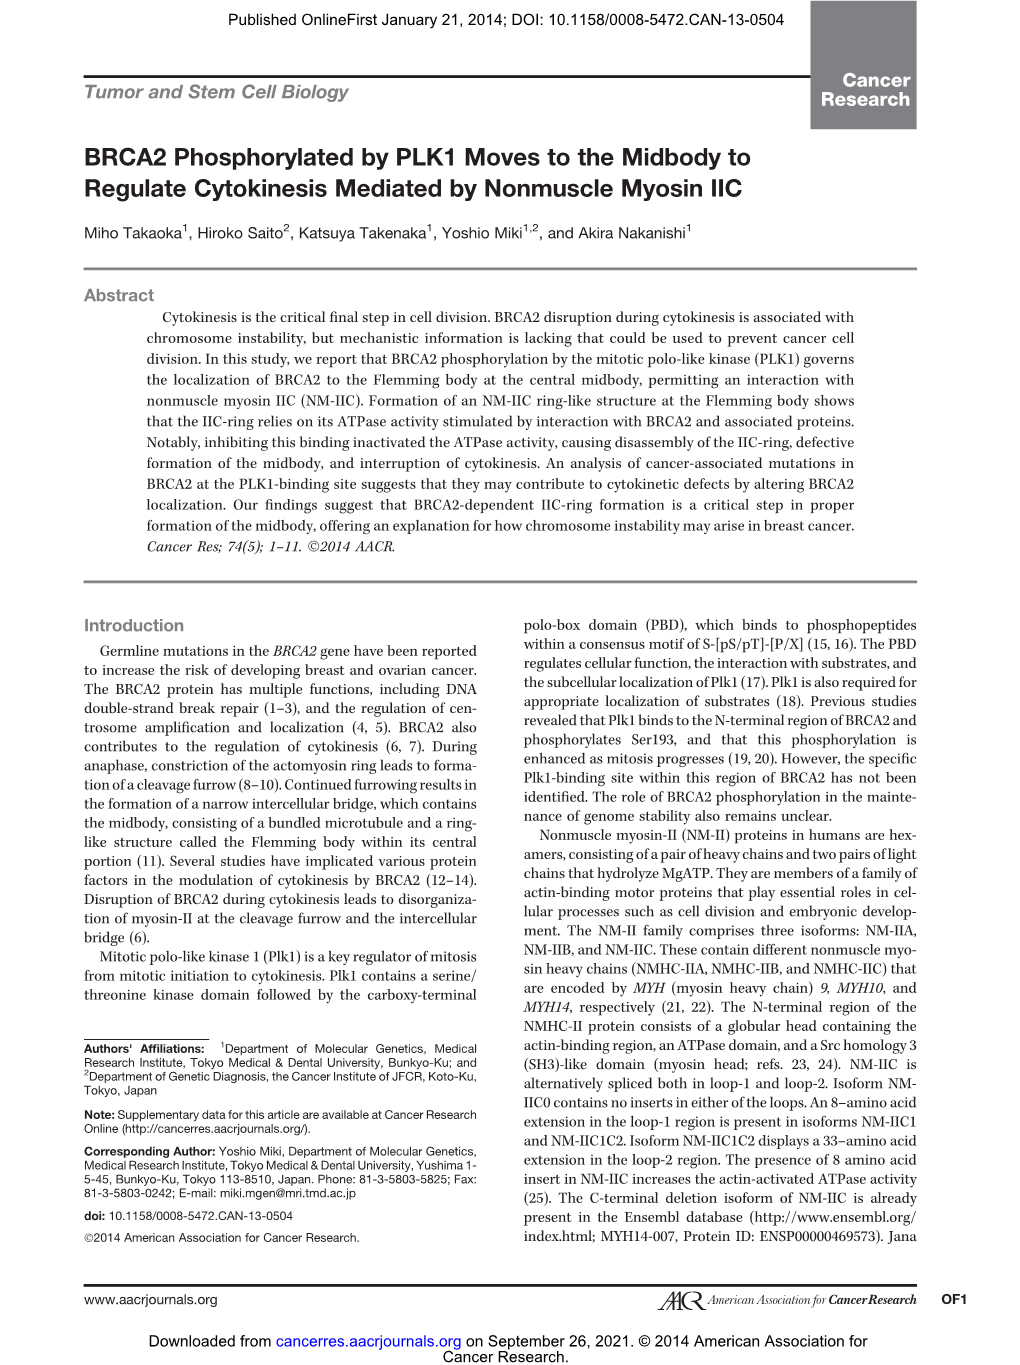 BRCA2 Phosphorylated by PLK1 Moves to the Midbody to Regulate Cytokinesis Mediated by Nonmuscle Myosin IIC